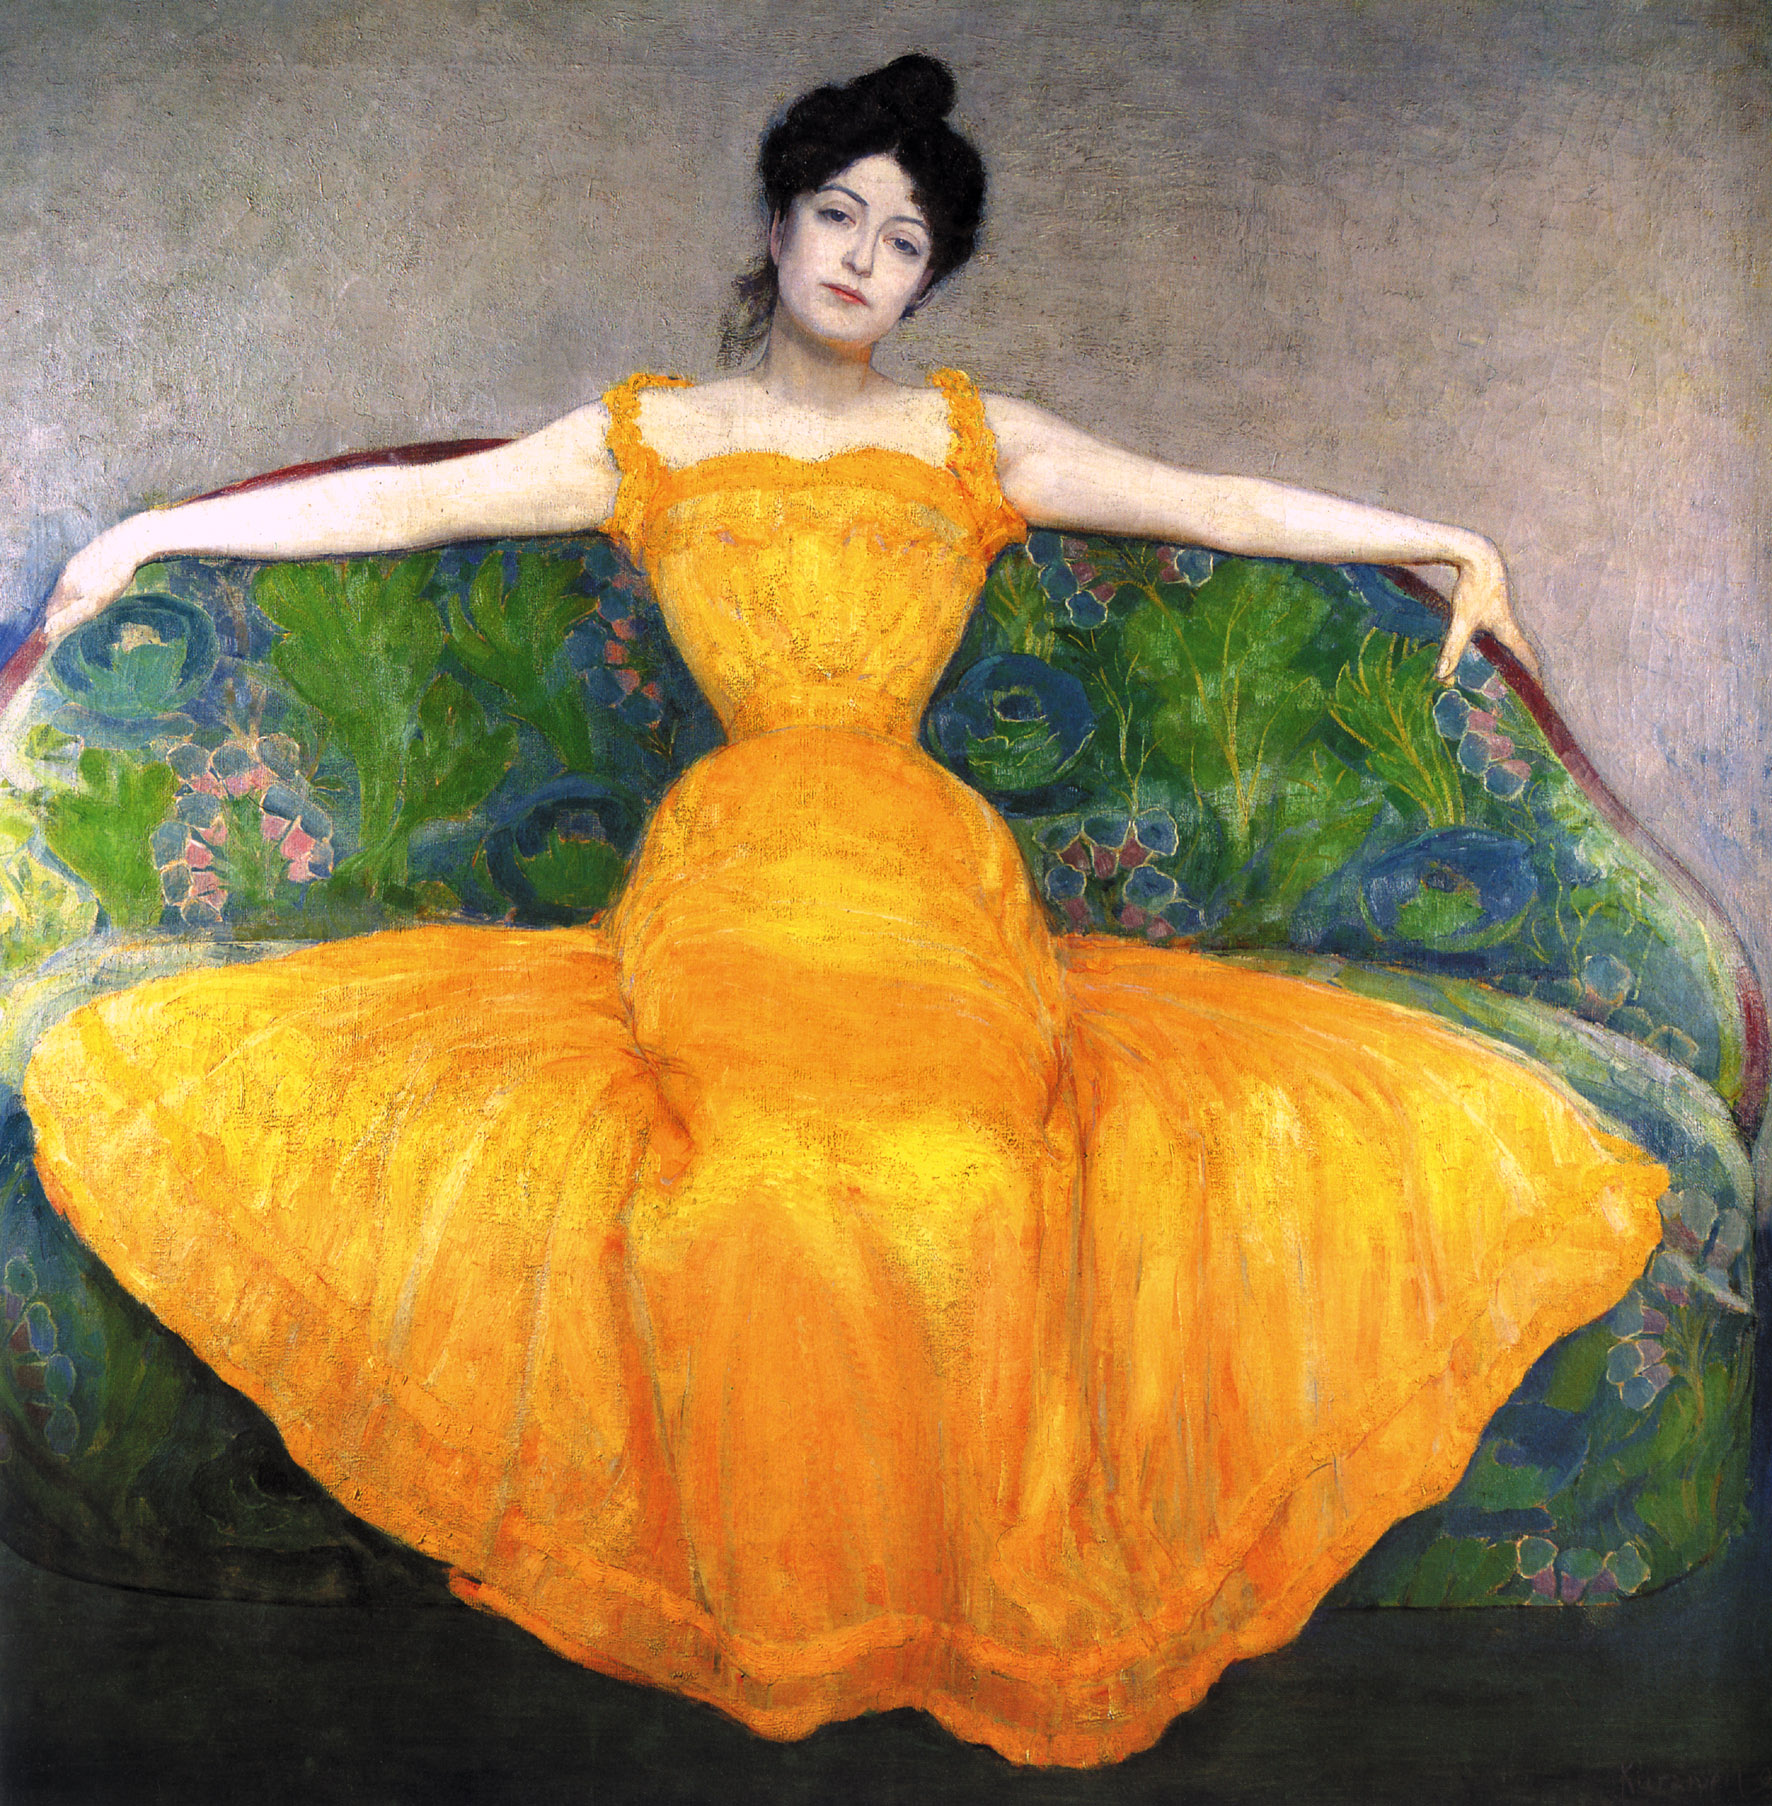 Femeie în galben by Max Kurzweil - 1899 - 171.5 cm x 171 cm 